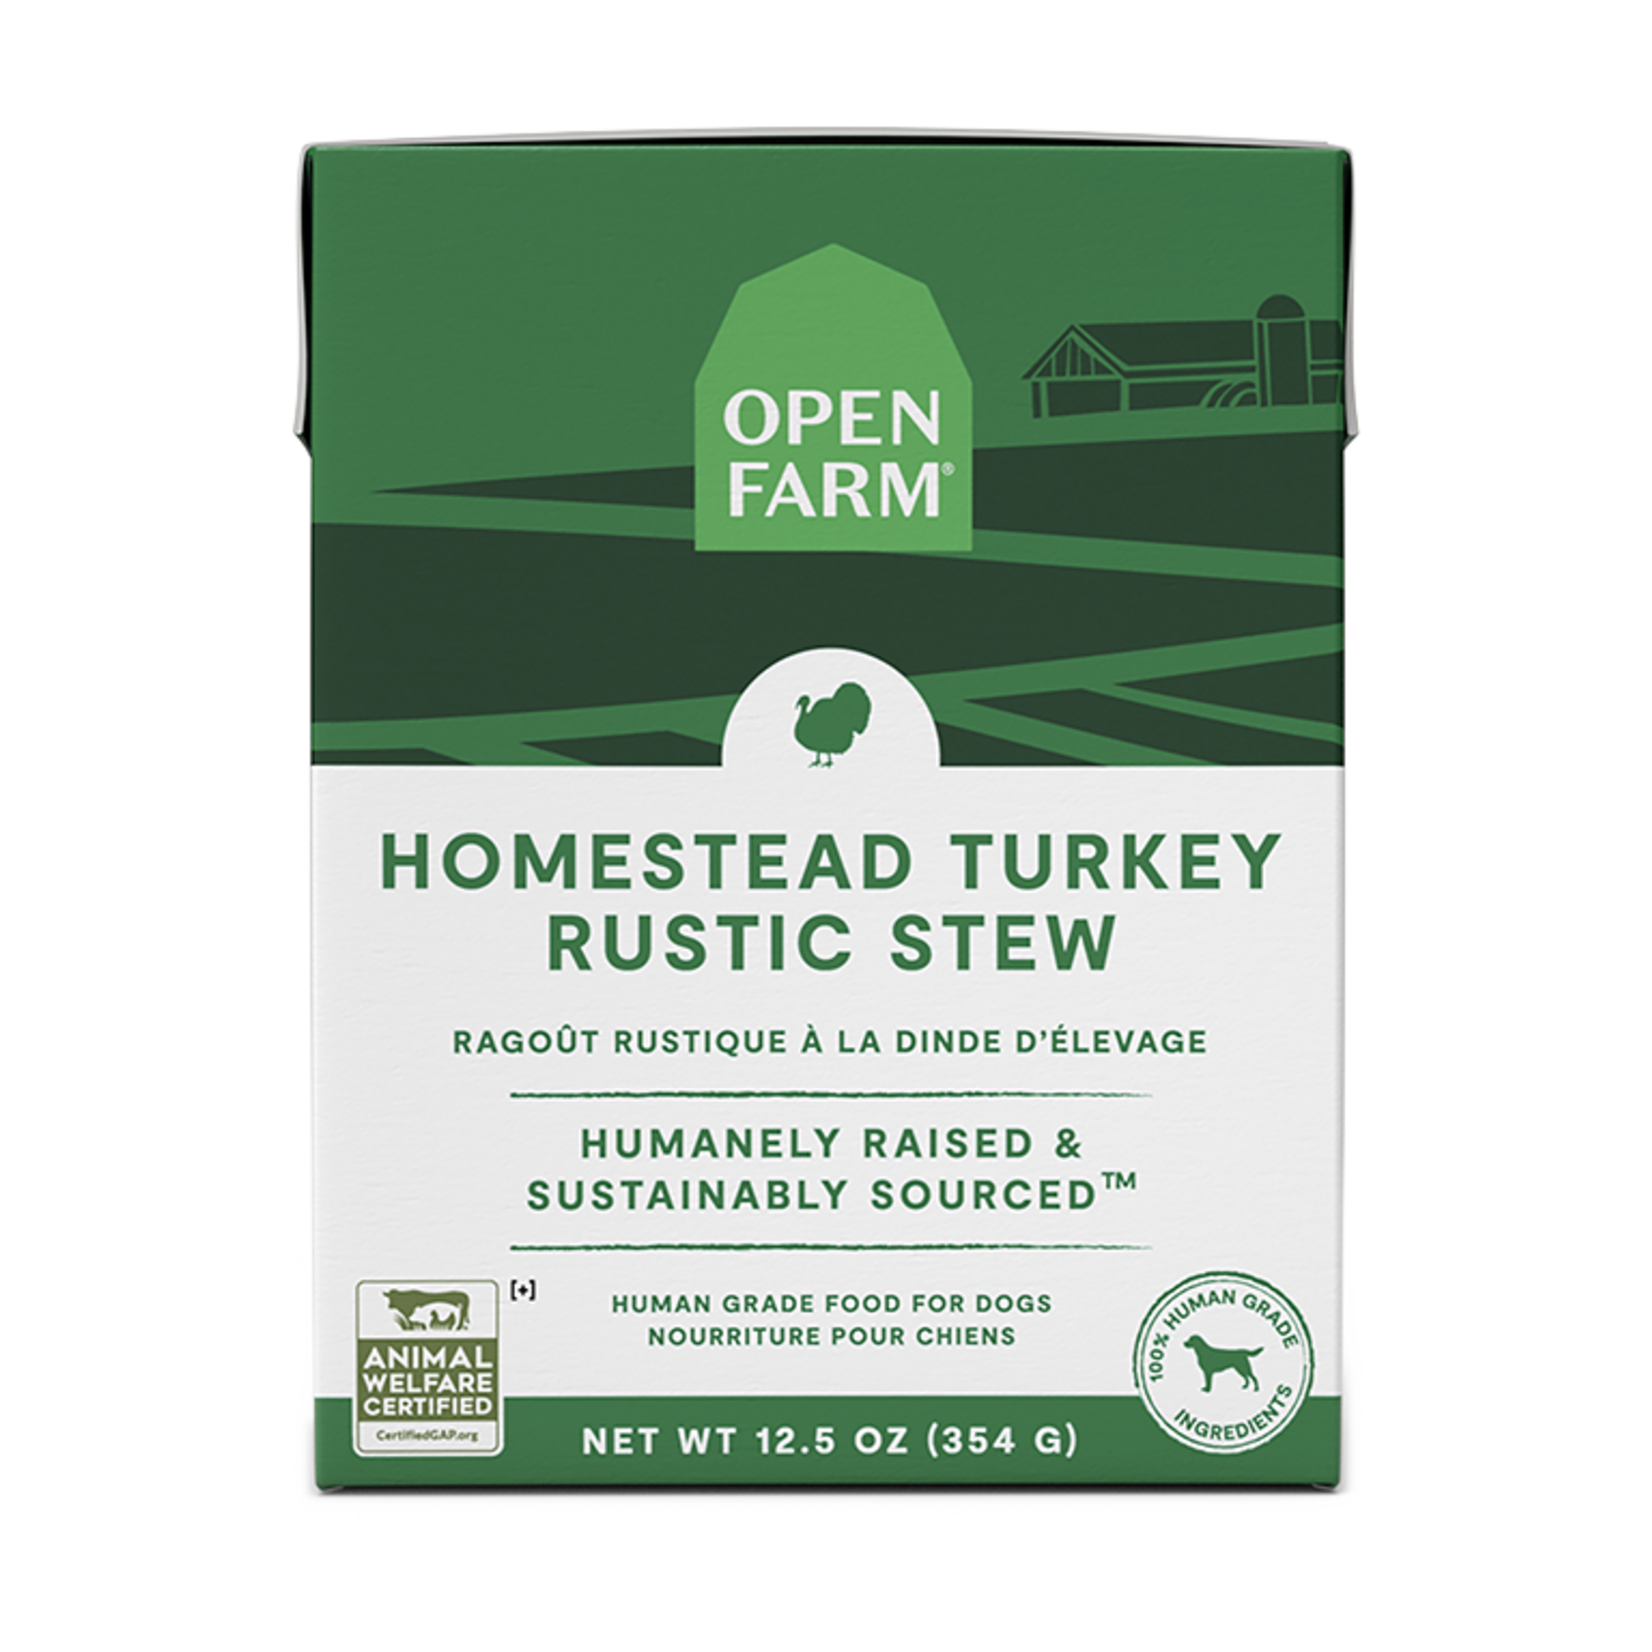 Open Farm Homestead Turkey Rustic Stew Wet Dog Food